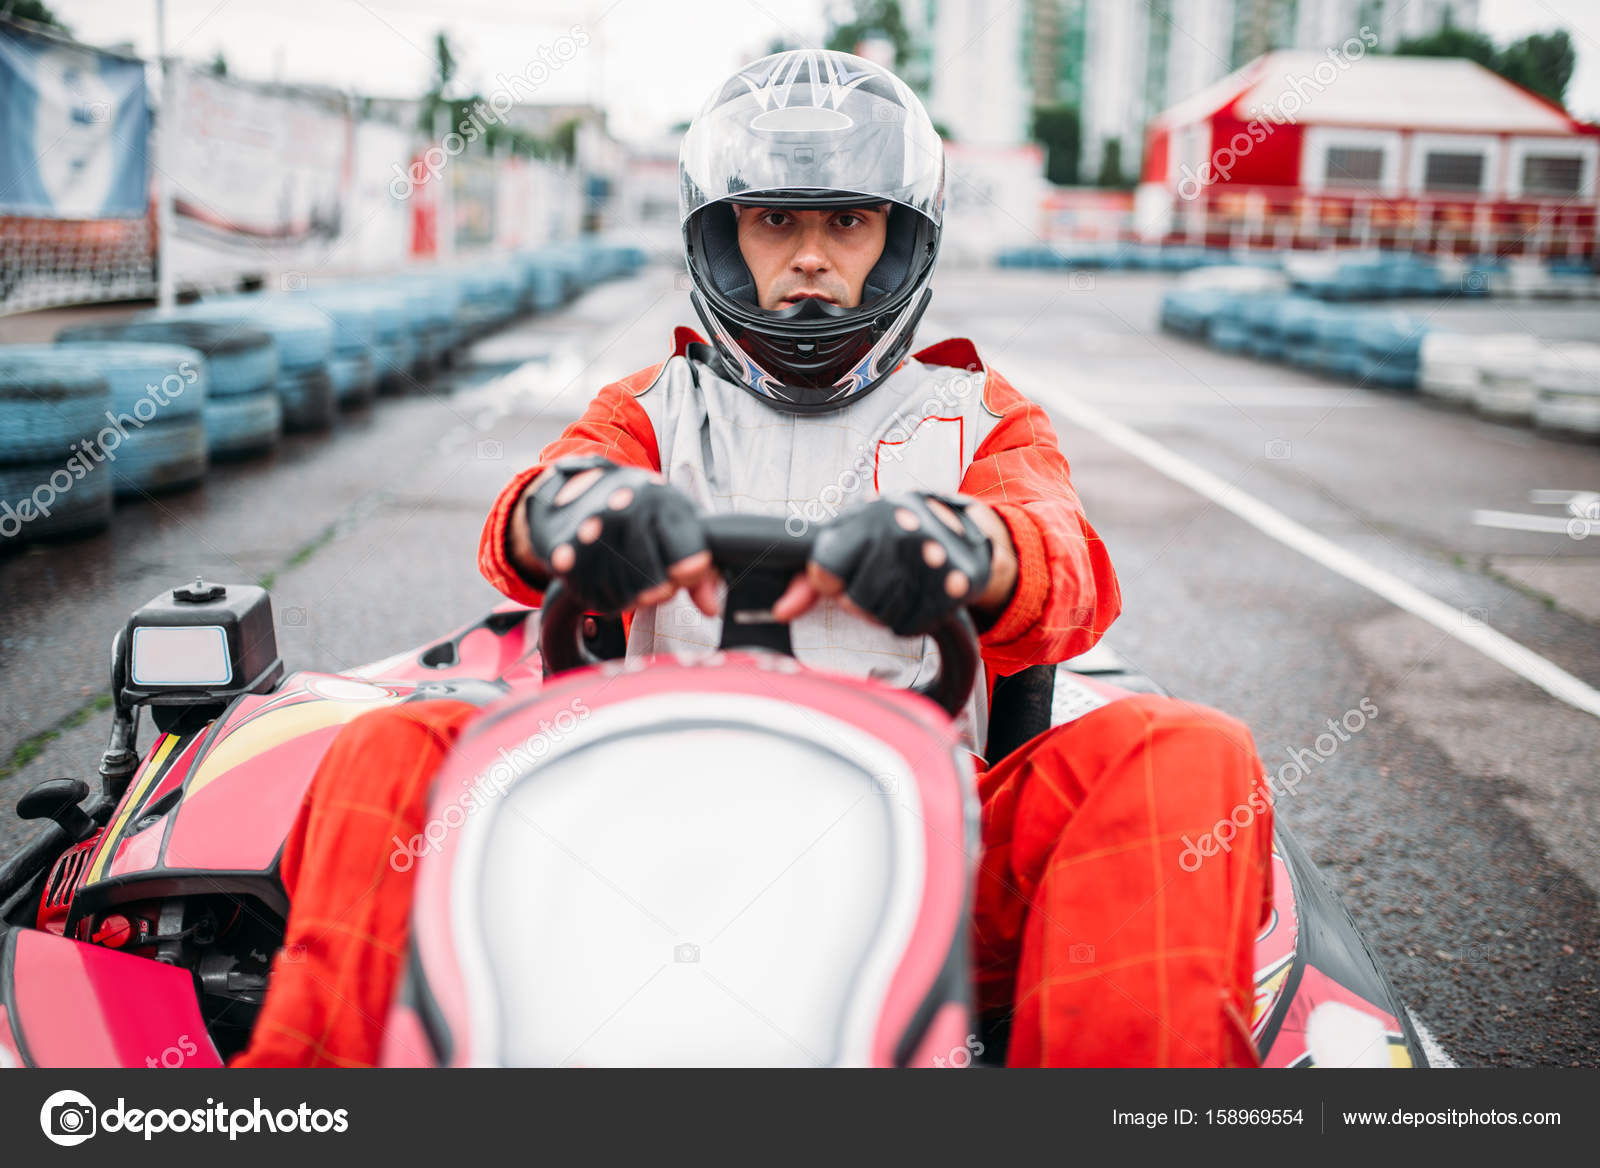 Corrida de kart Kart racing Automobilismo Motorista de carro de